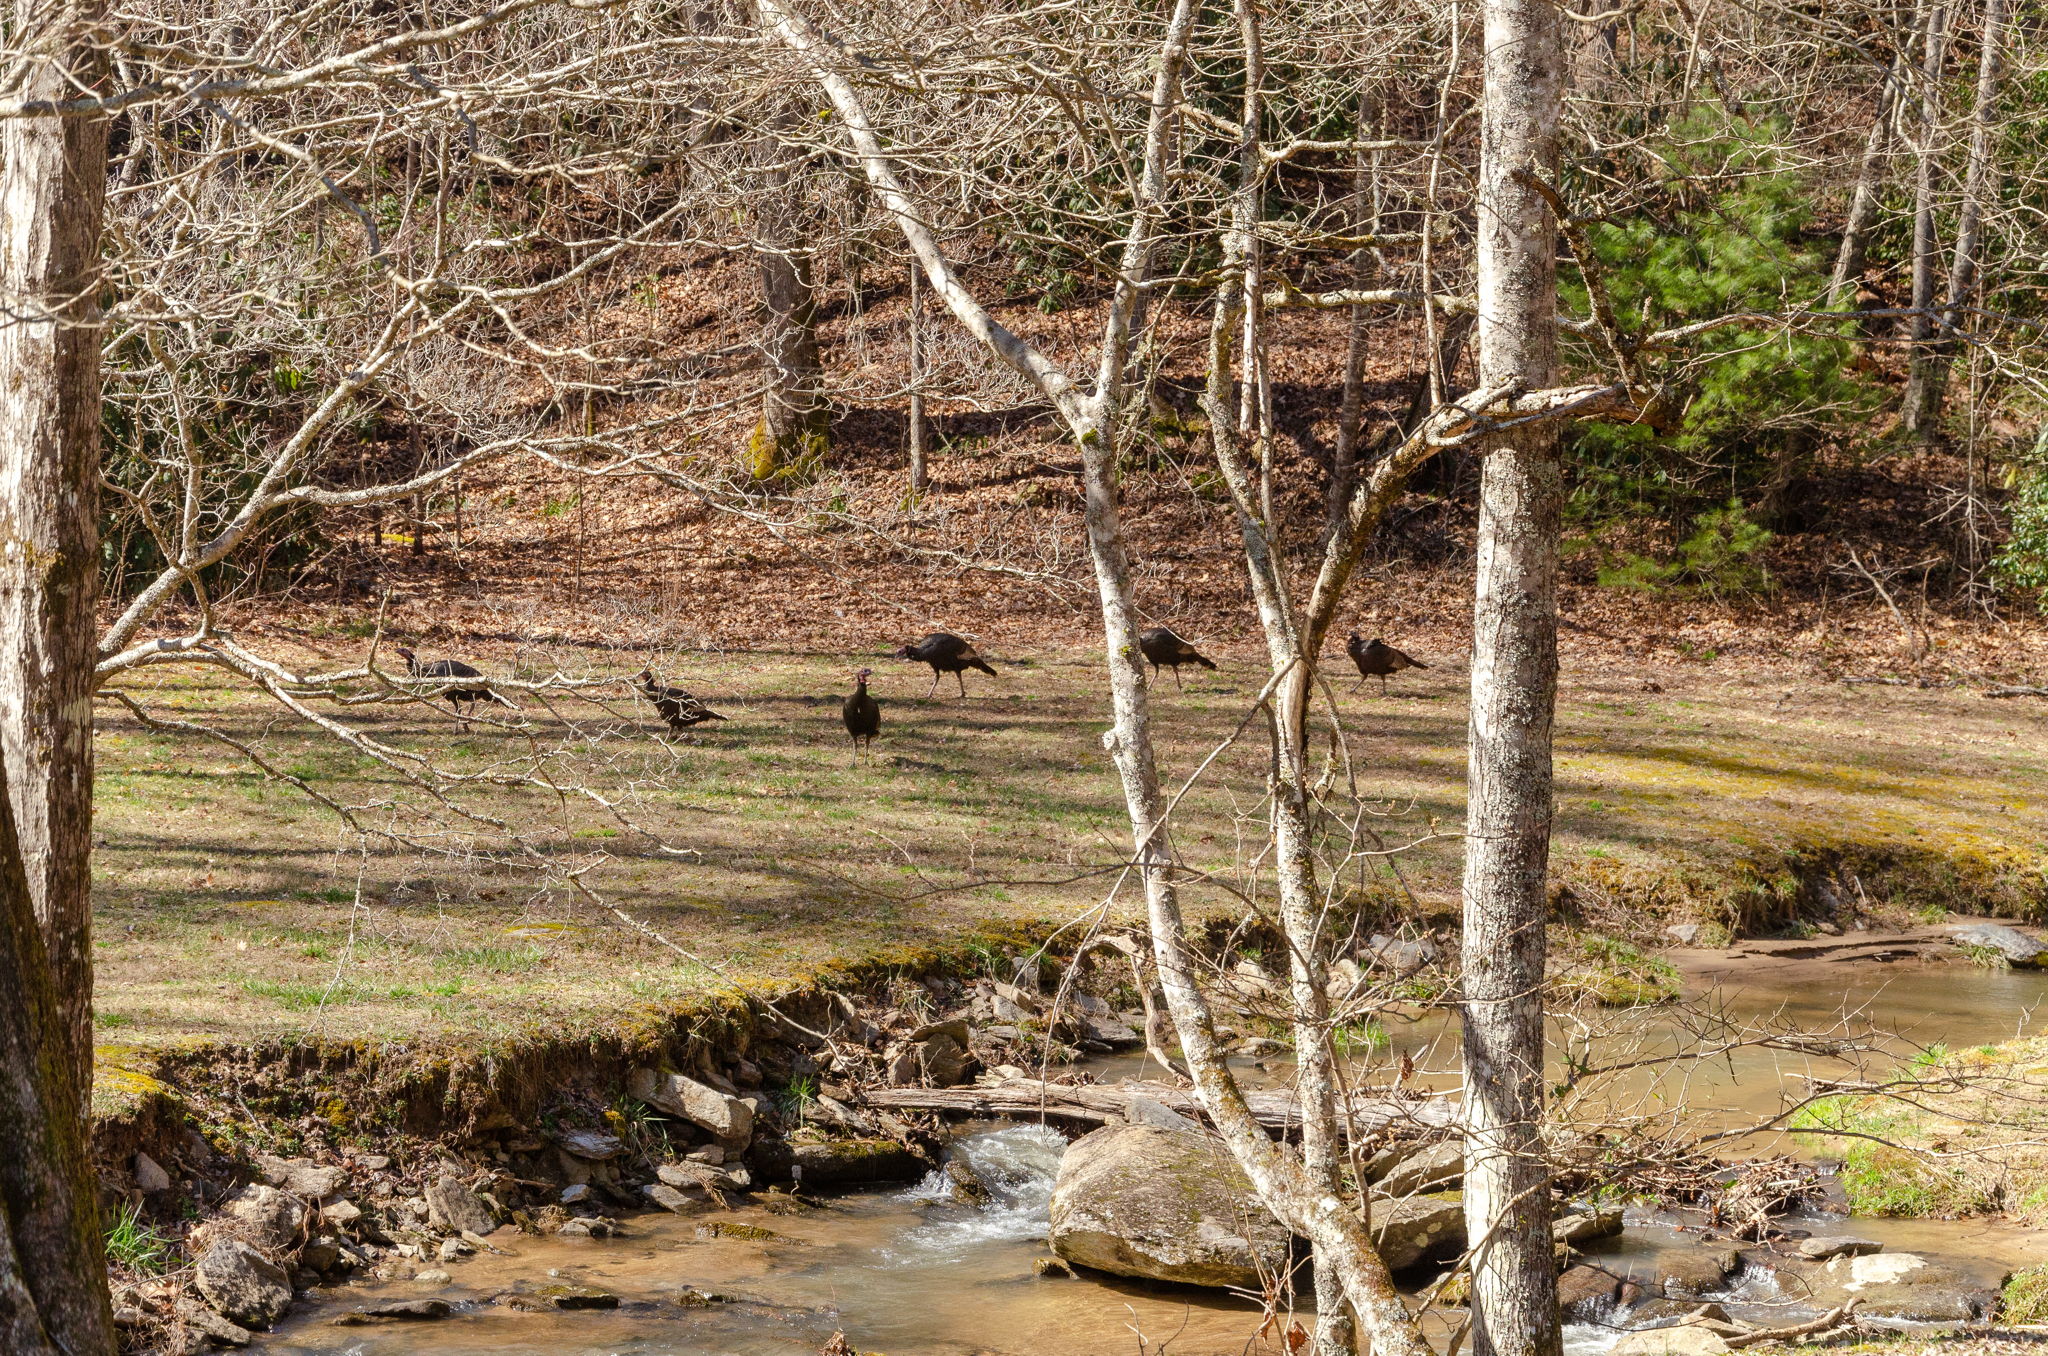 Creek/Wild Turkeys